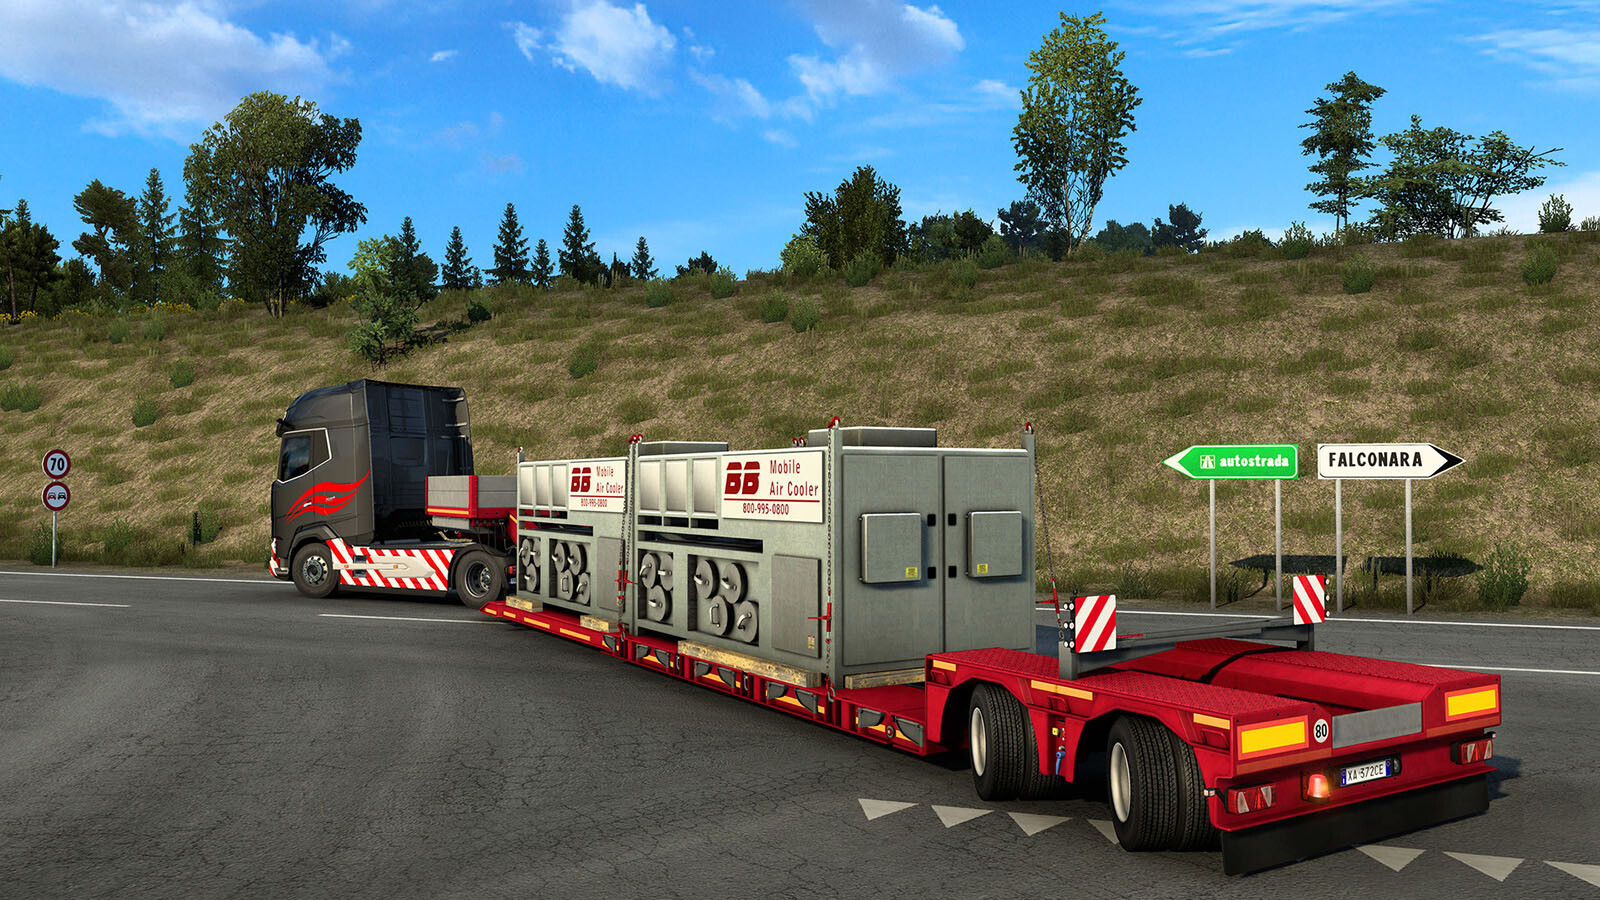 Euro Truck Simulator 2 [Legendary Edition] STEAM digital for Windows